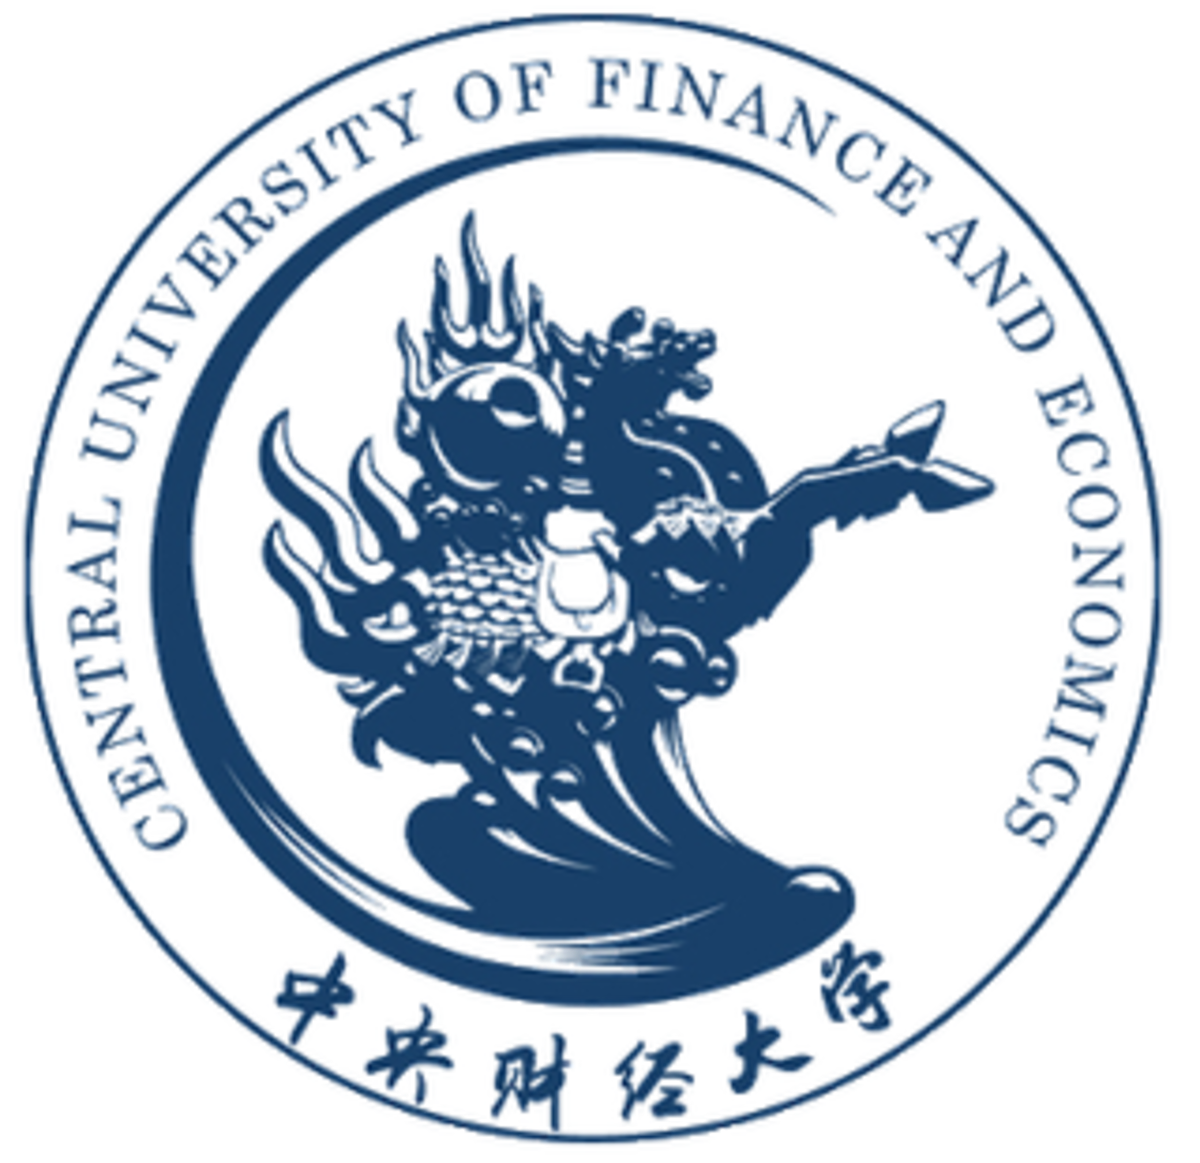 China Central University of Finance and Economics logo